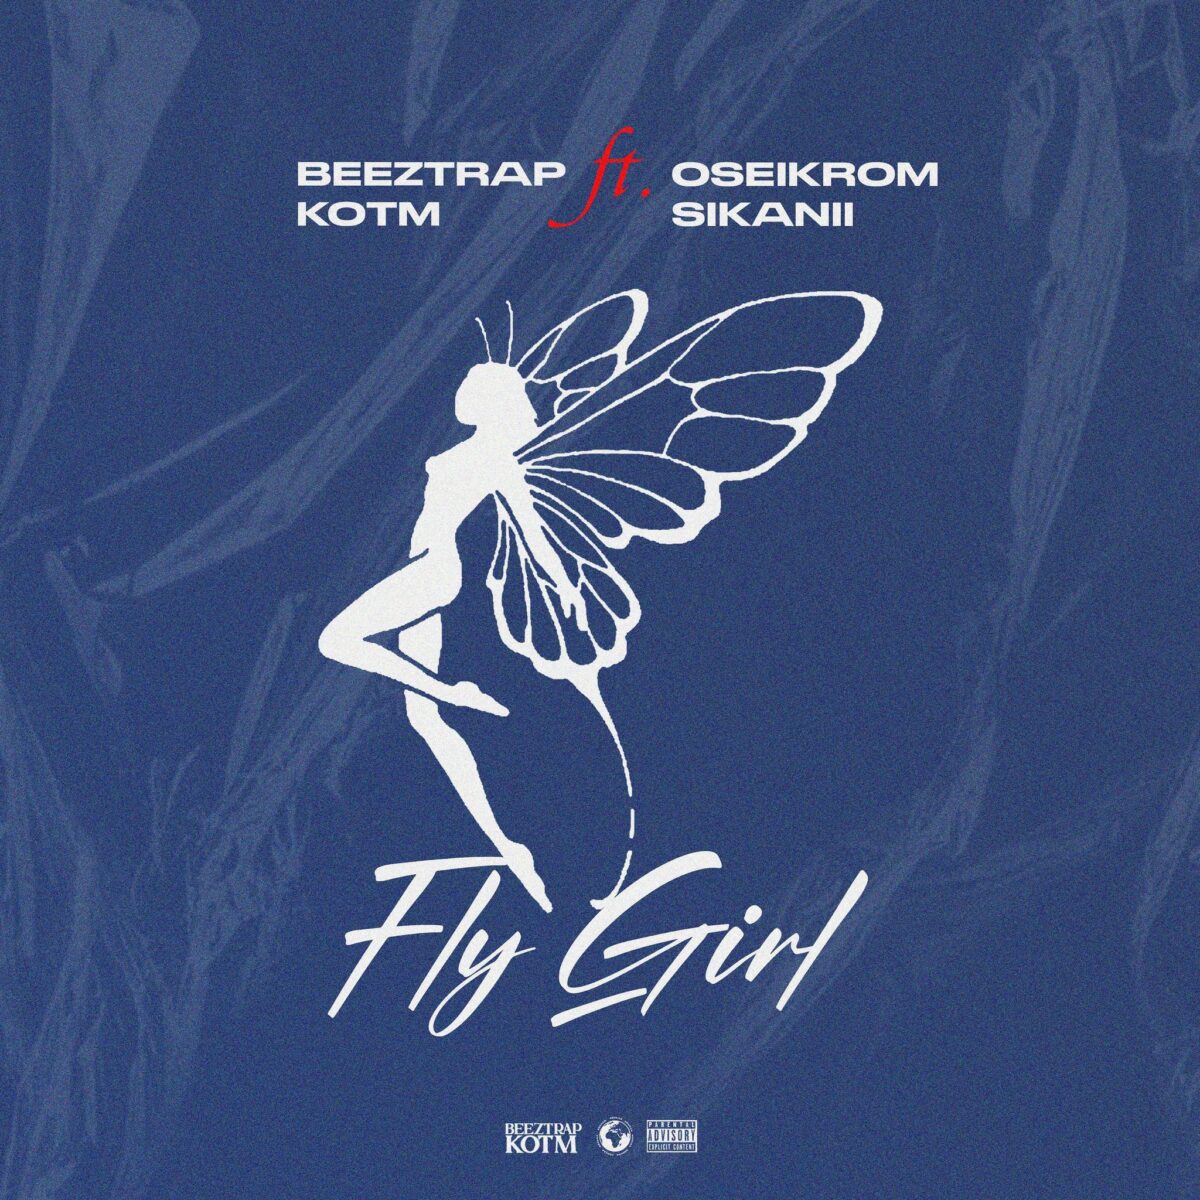 Fly Girl by Beeztrap KOTM & Oseikrom Sikanii